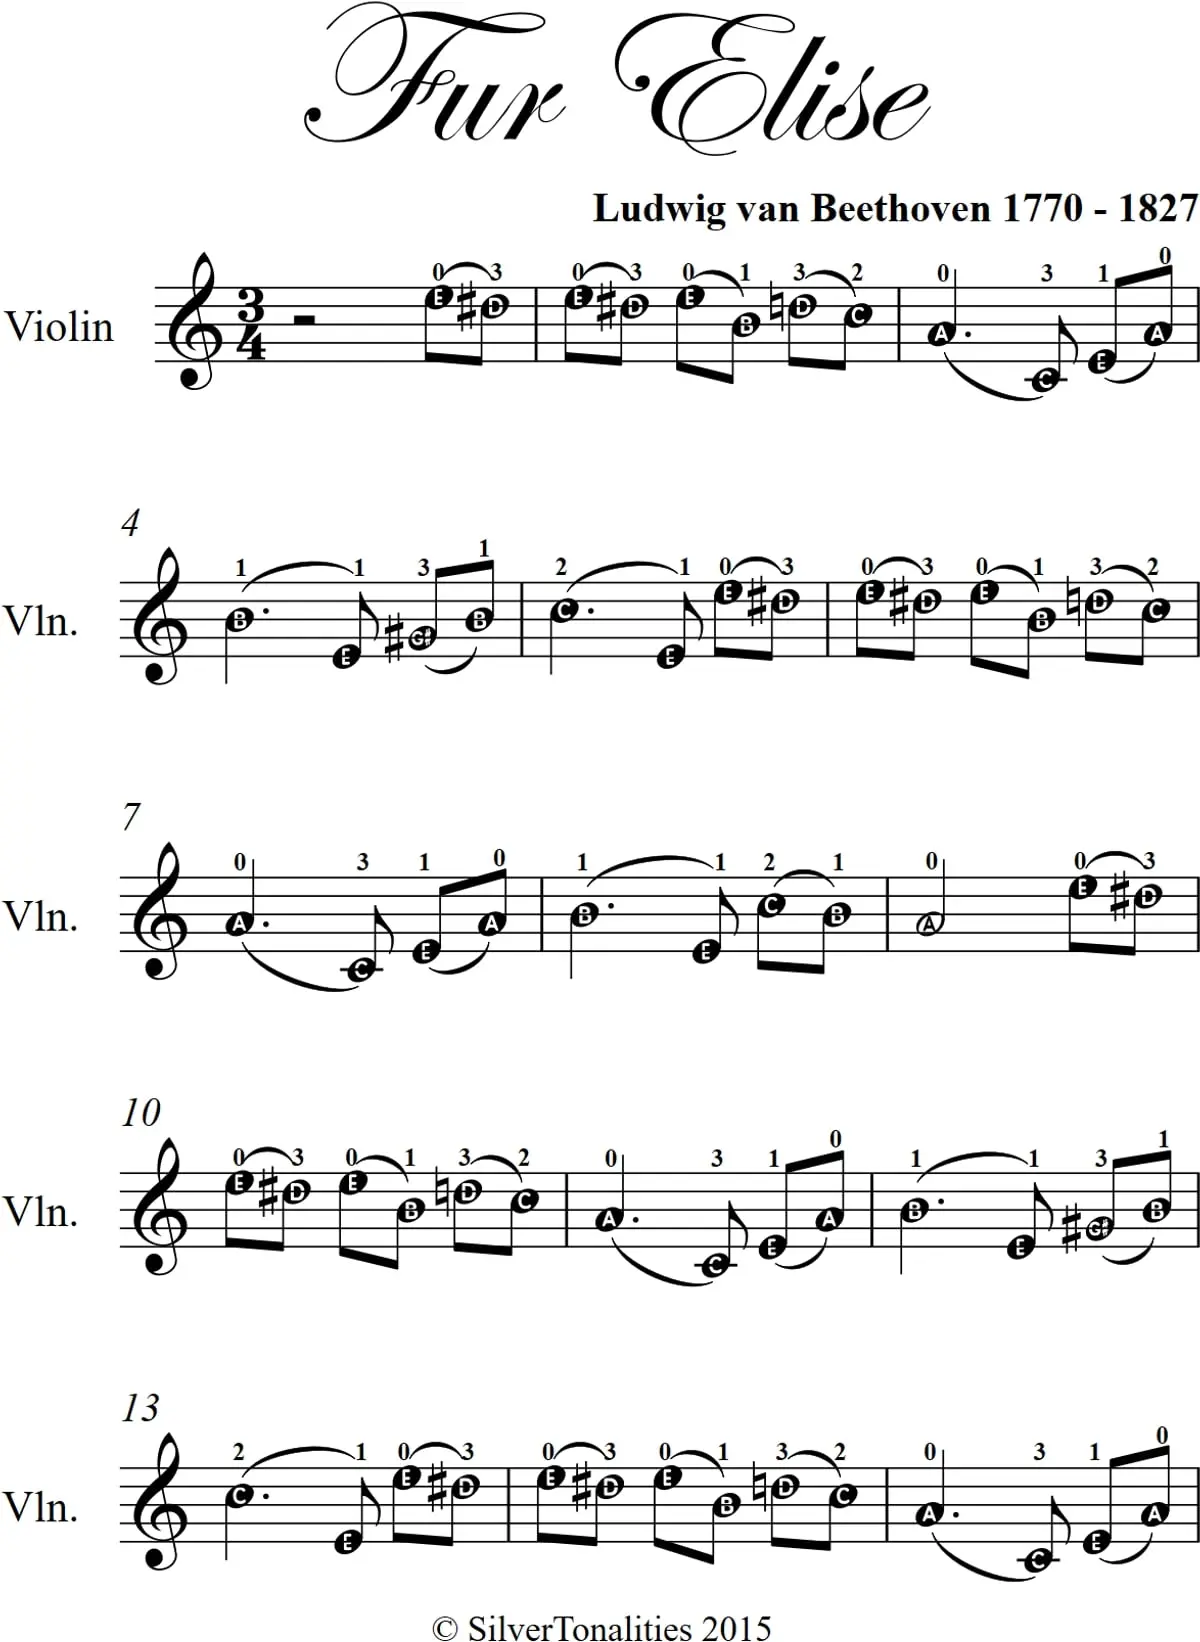 fur elise violin notes - What melody is Für Elise